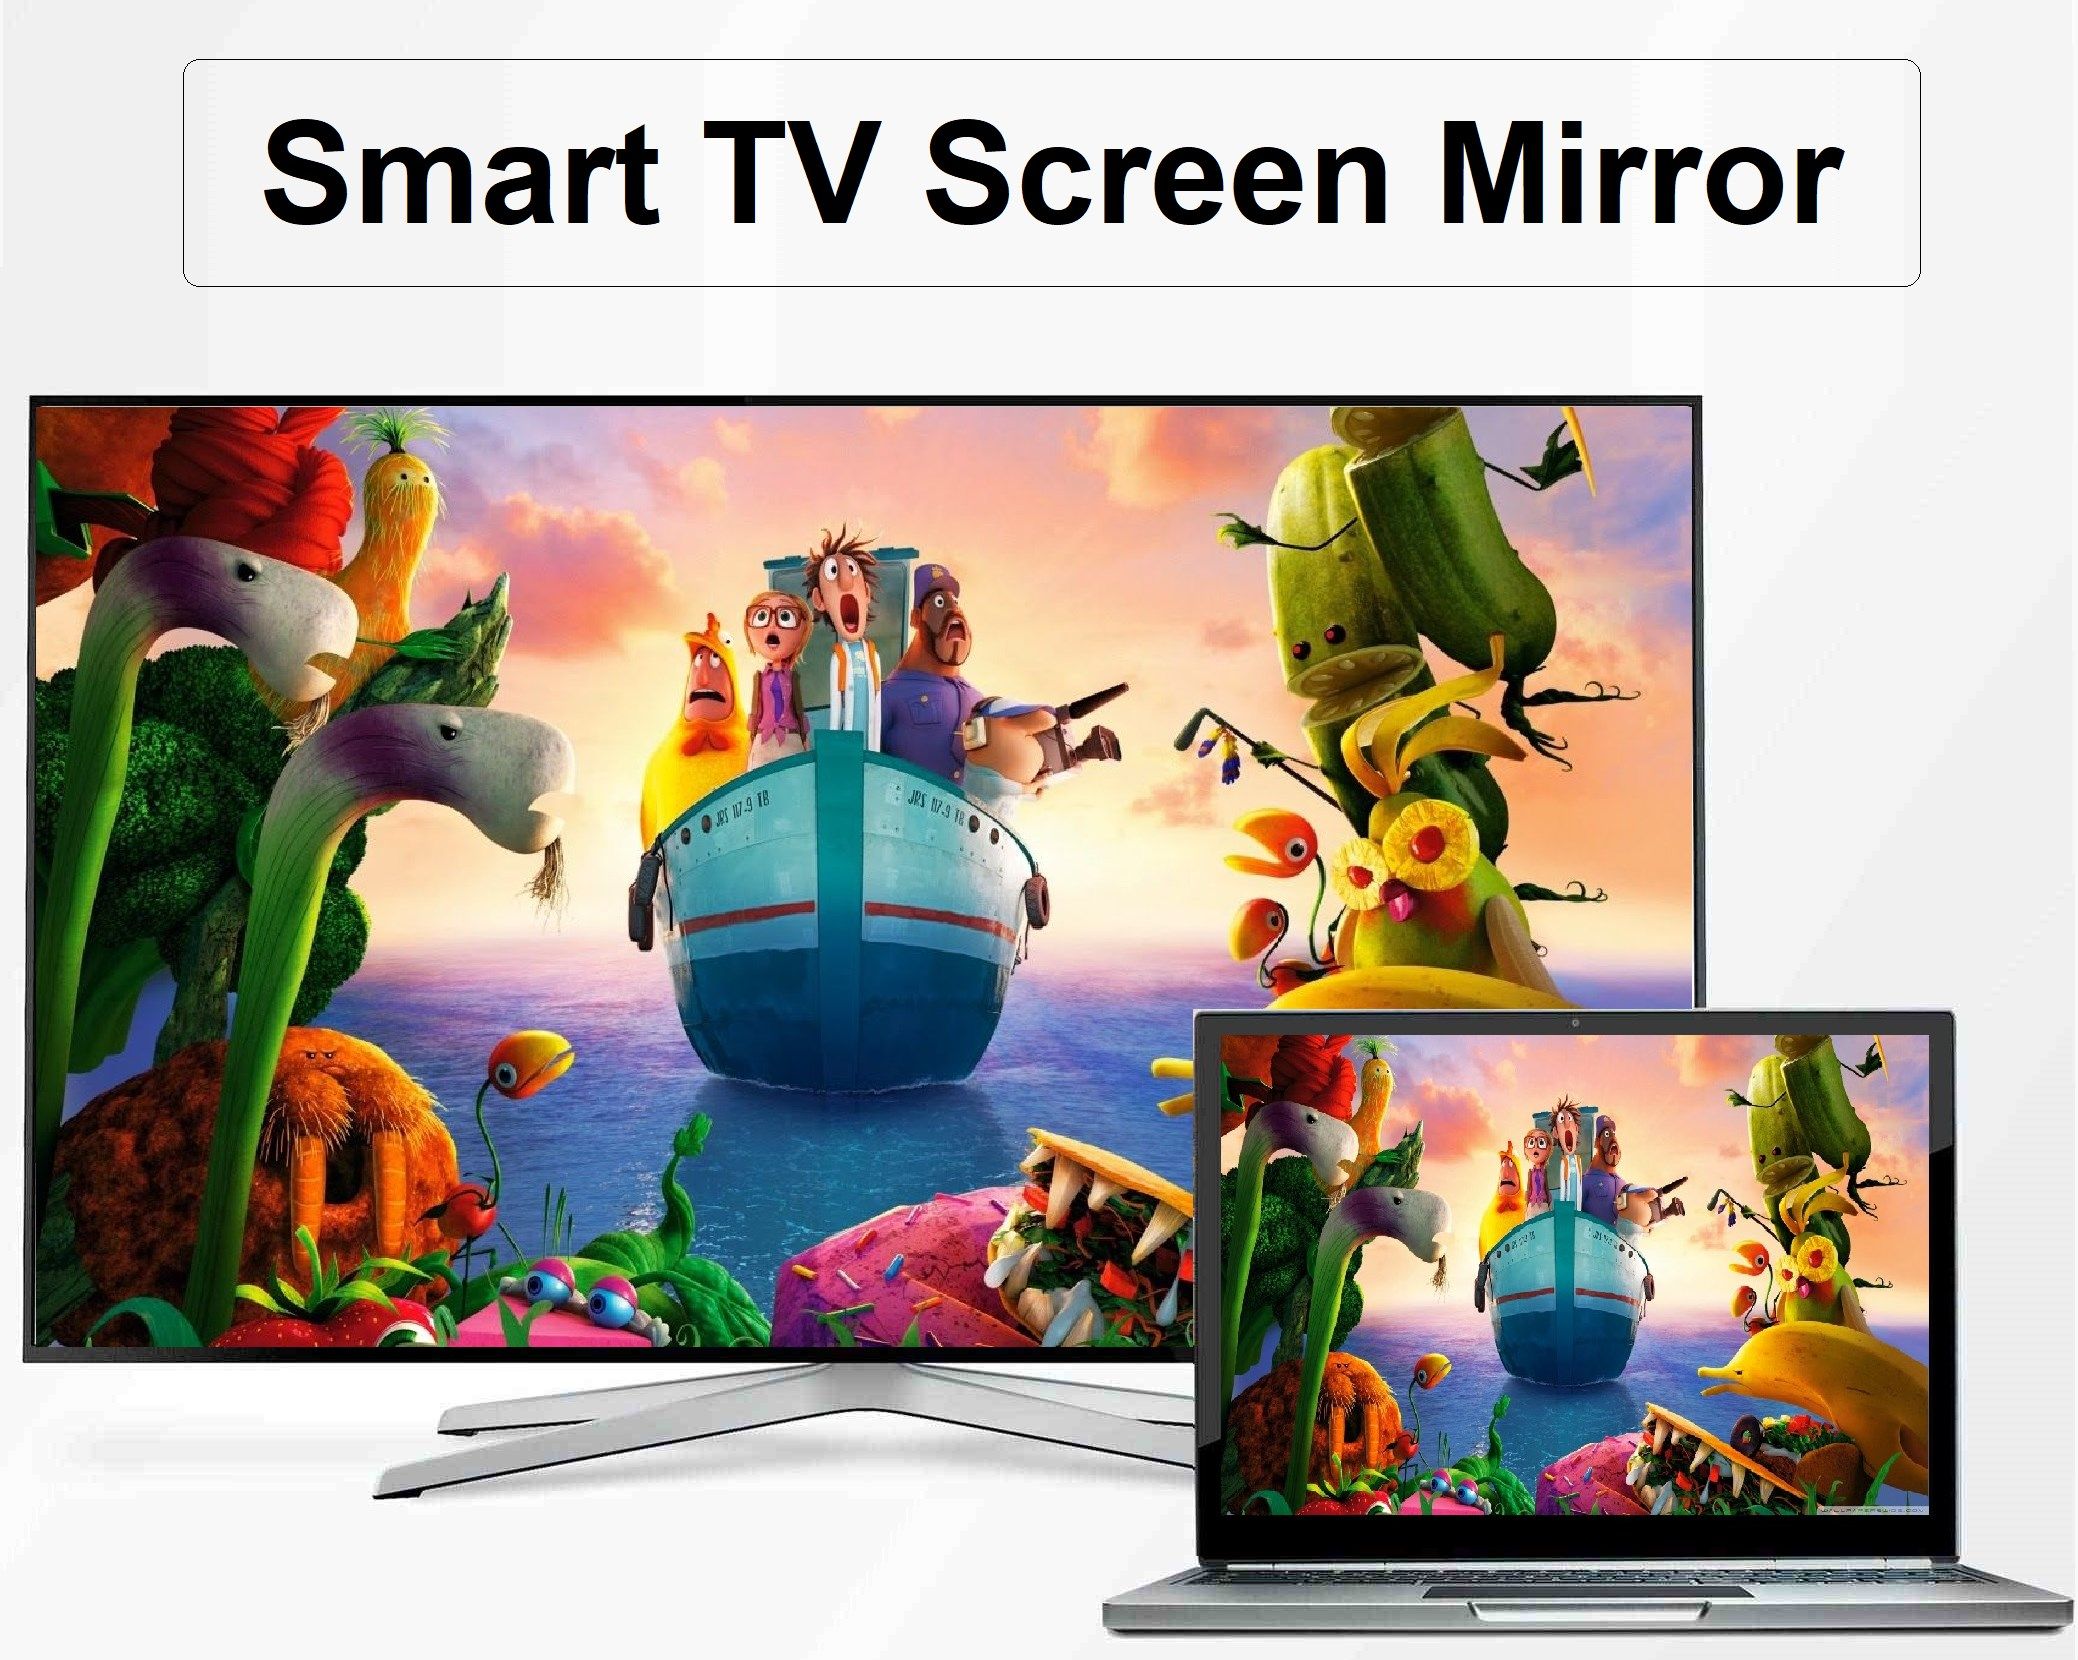 Smart TV Screen Mirror Advance